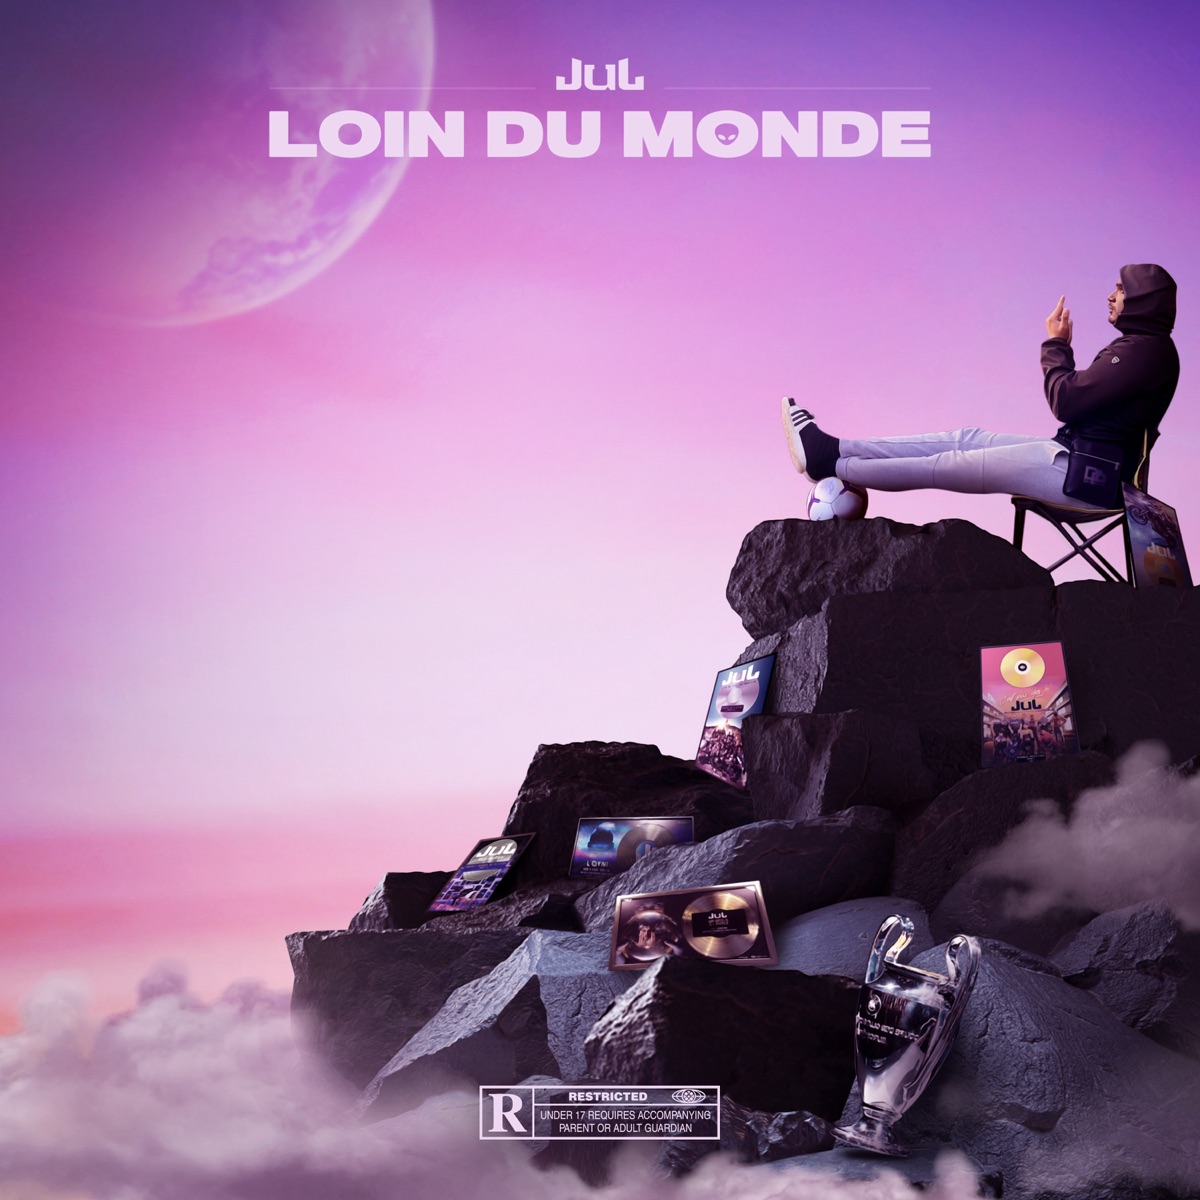 Loin du monde - Album by Jul - Apple Music